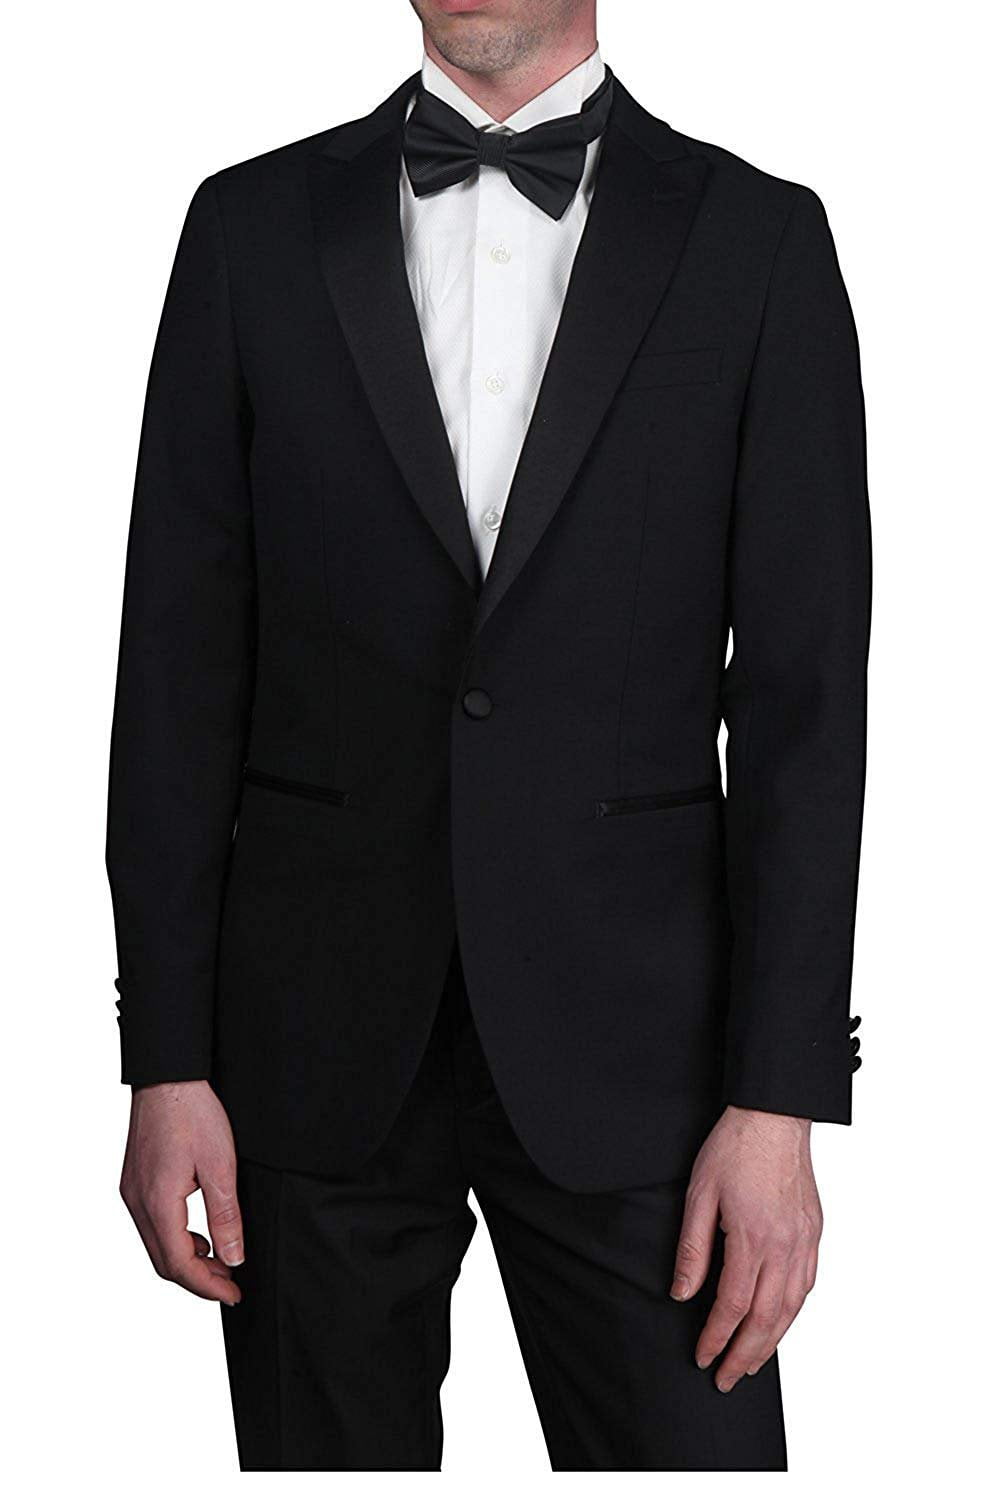 Wingtip Mens Two Button Wool Tuxedo Suit Jacket Black